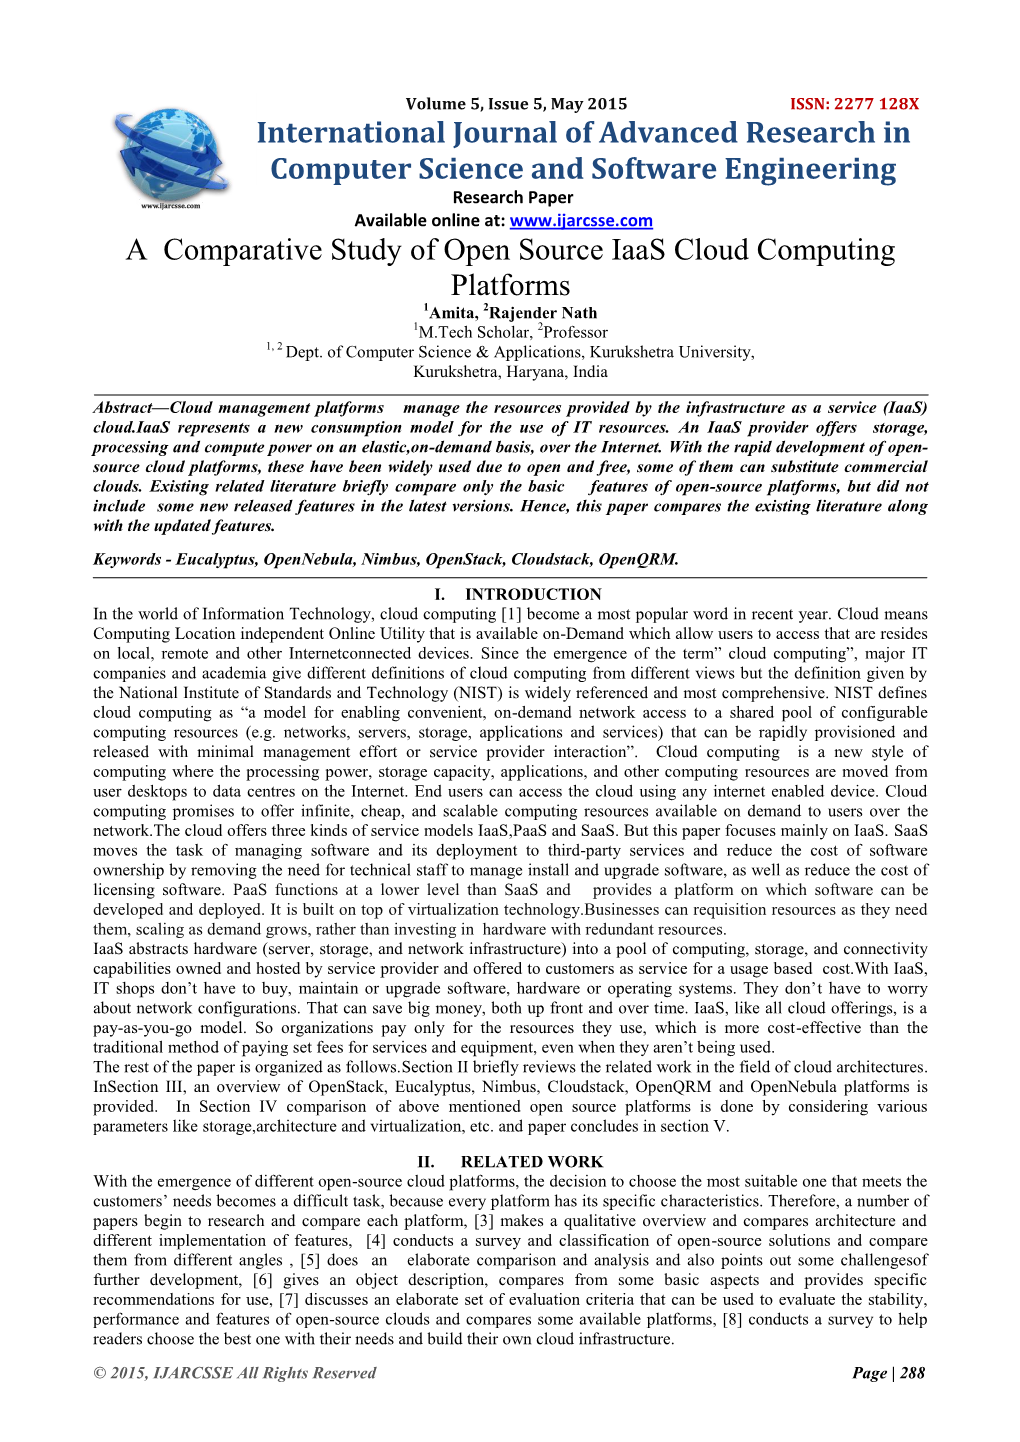 A Comparative Study of Open Source Iaas Cloud Computing Platforms 1Amita, 2Rajender Nath 1M.Tech Scholar, 2Professor 1, 2 Dept